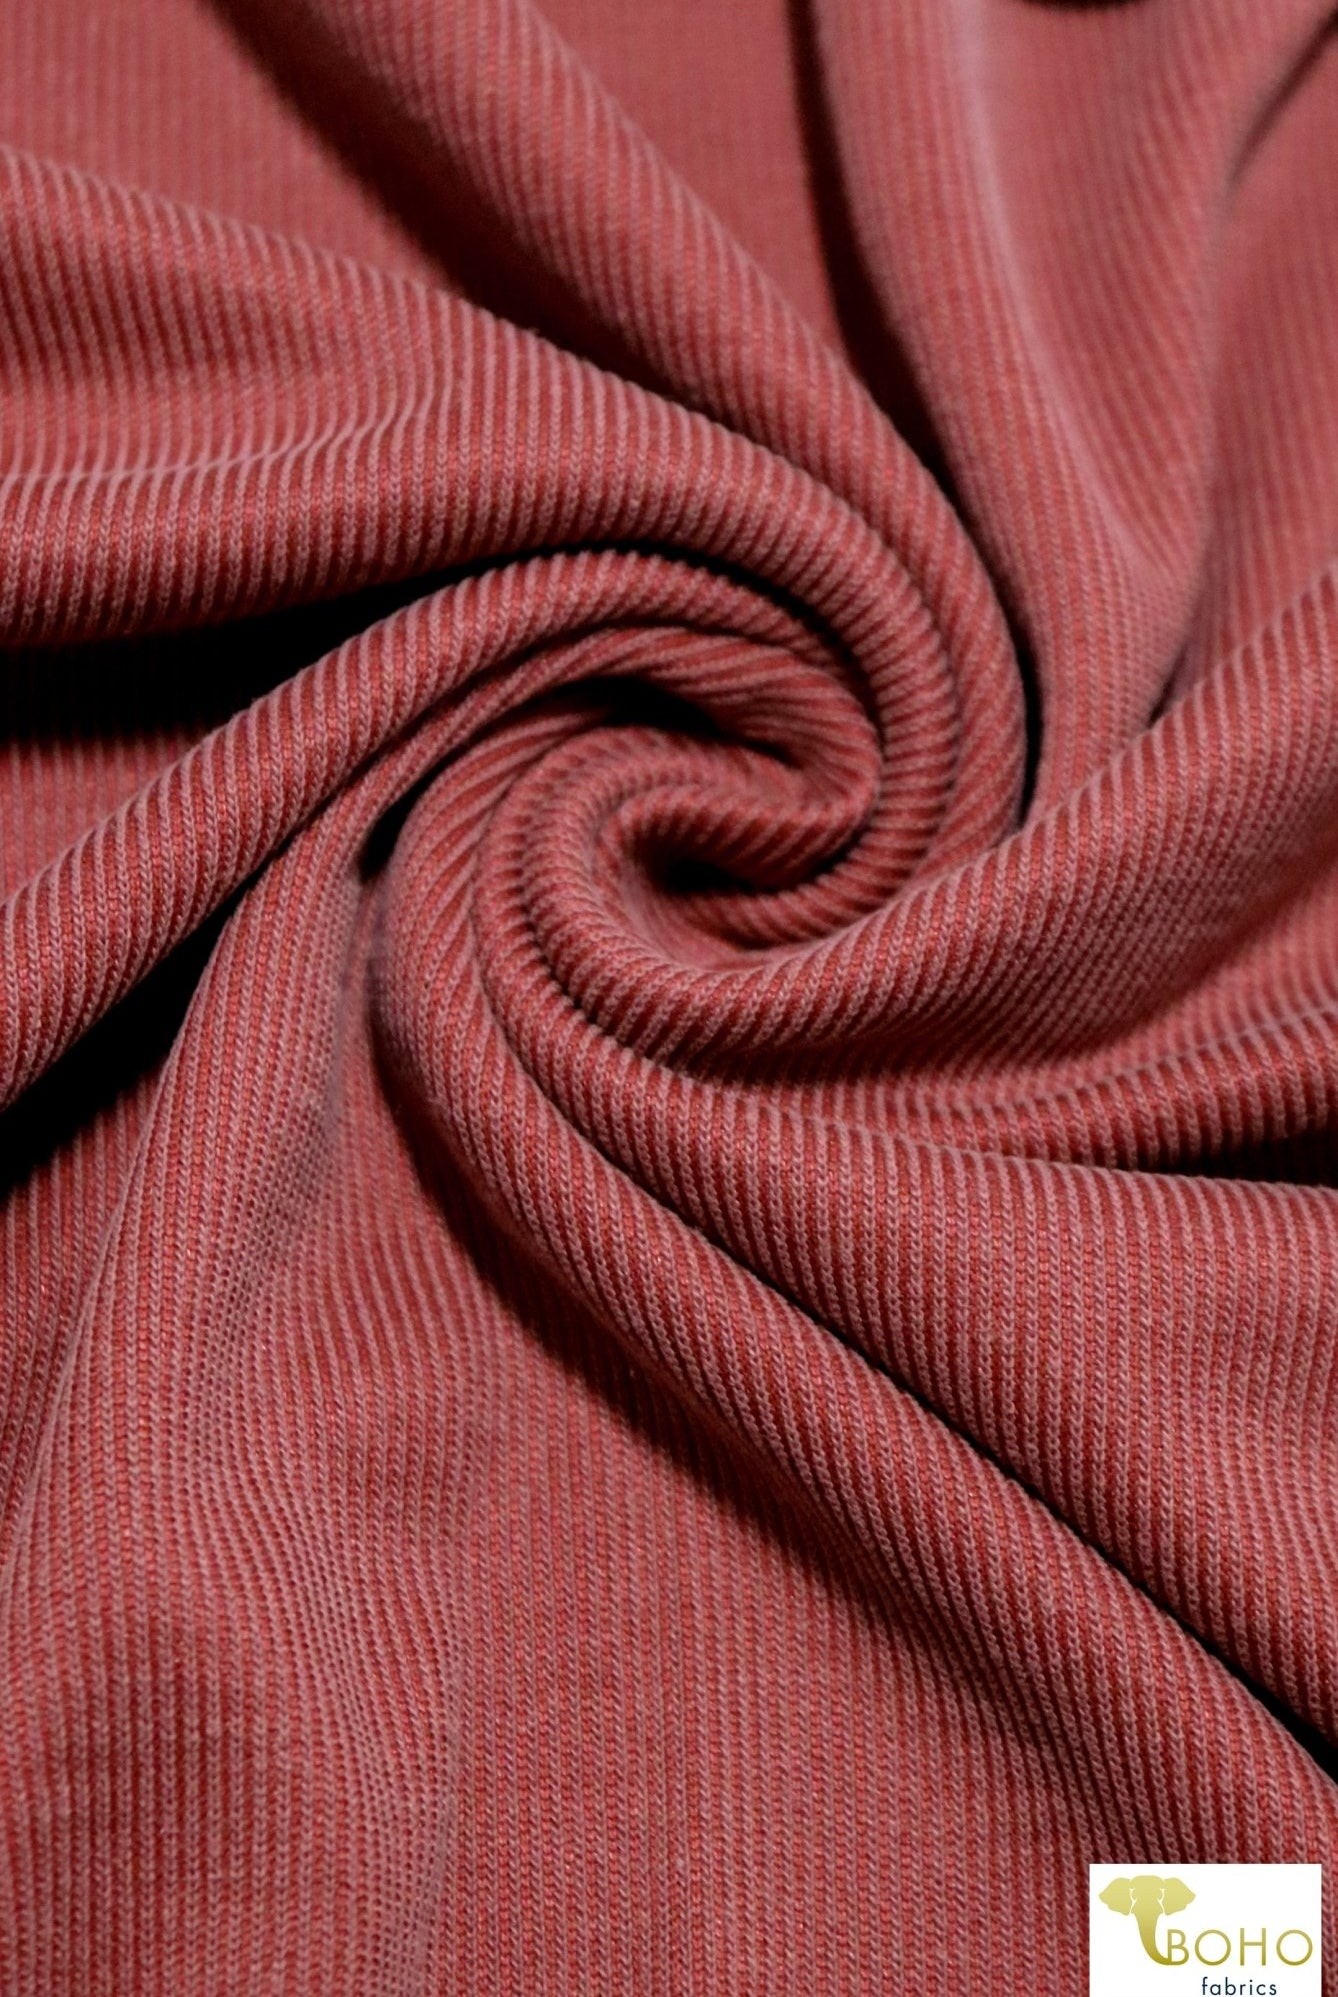 Brick Red, Cupro Rib Knit. CUP.R-112-RED - Boho Fabrics